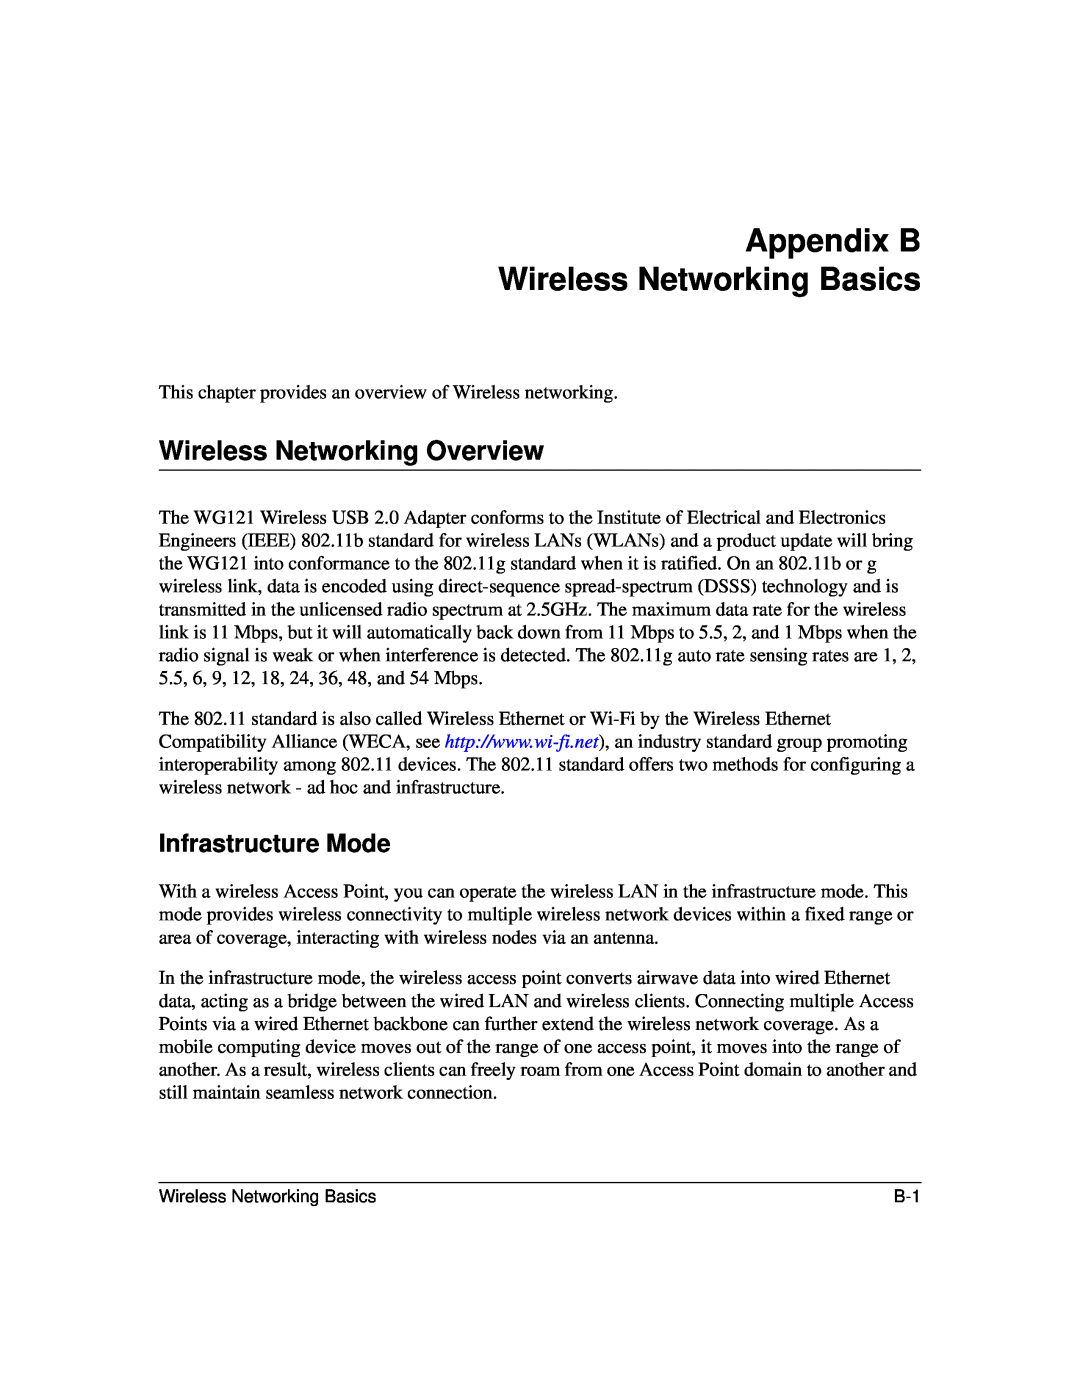 NETGEAR WG121 user manual Appendix B Wireless Networking Basics, Wireless Networking Overview, Infrastructure Mode 